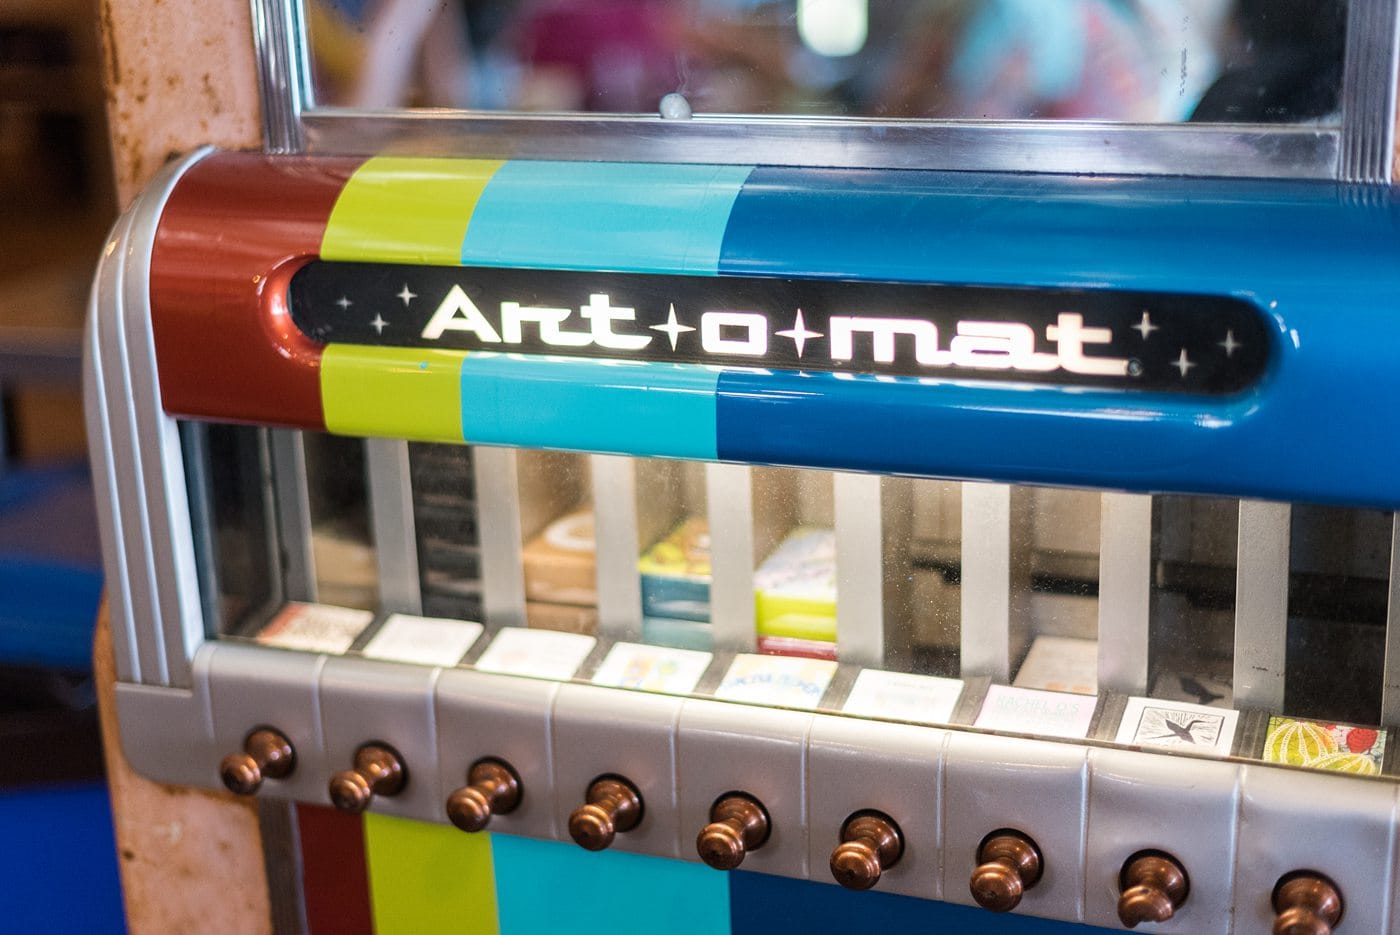 Upcycled Retro Cigarette Machines: How the Art-o-Mat from Winston-Salem is Democratizing Art